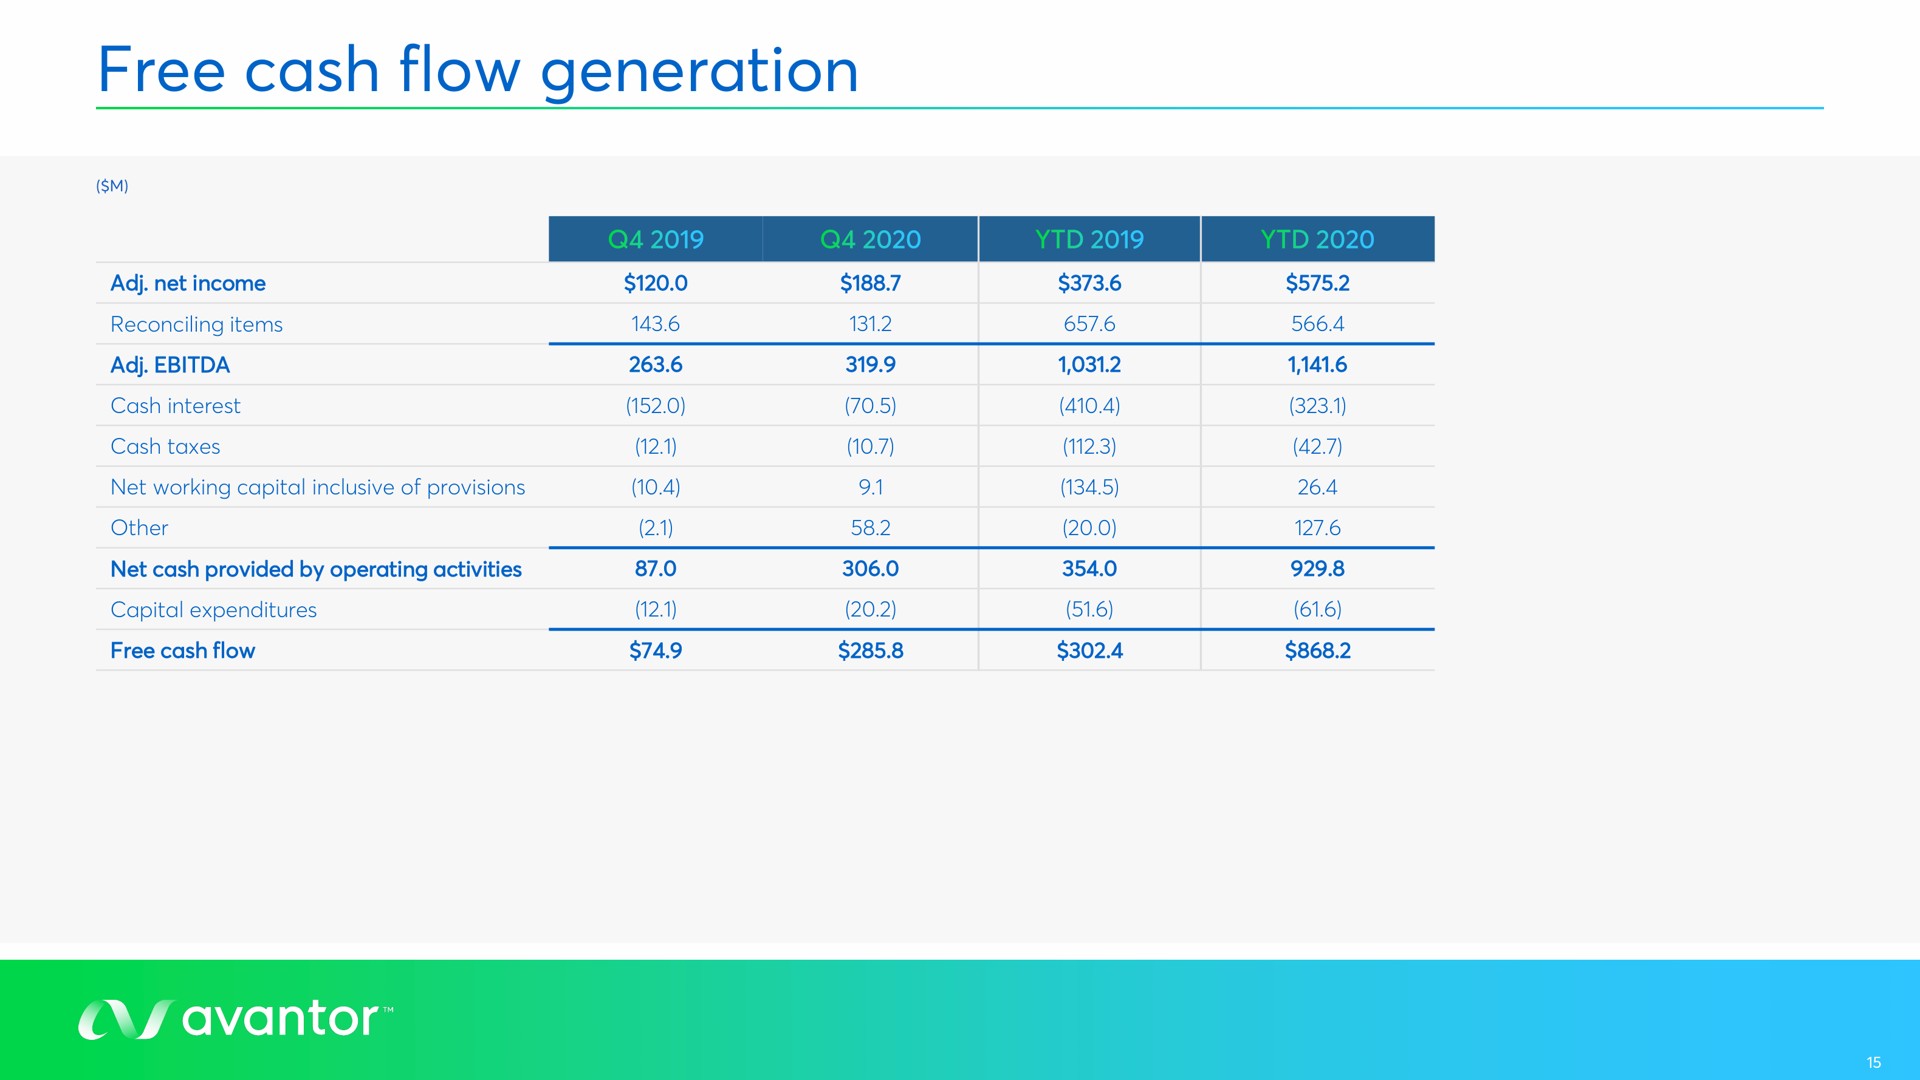 free cash flow generation see | Avantor